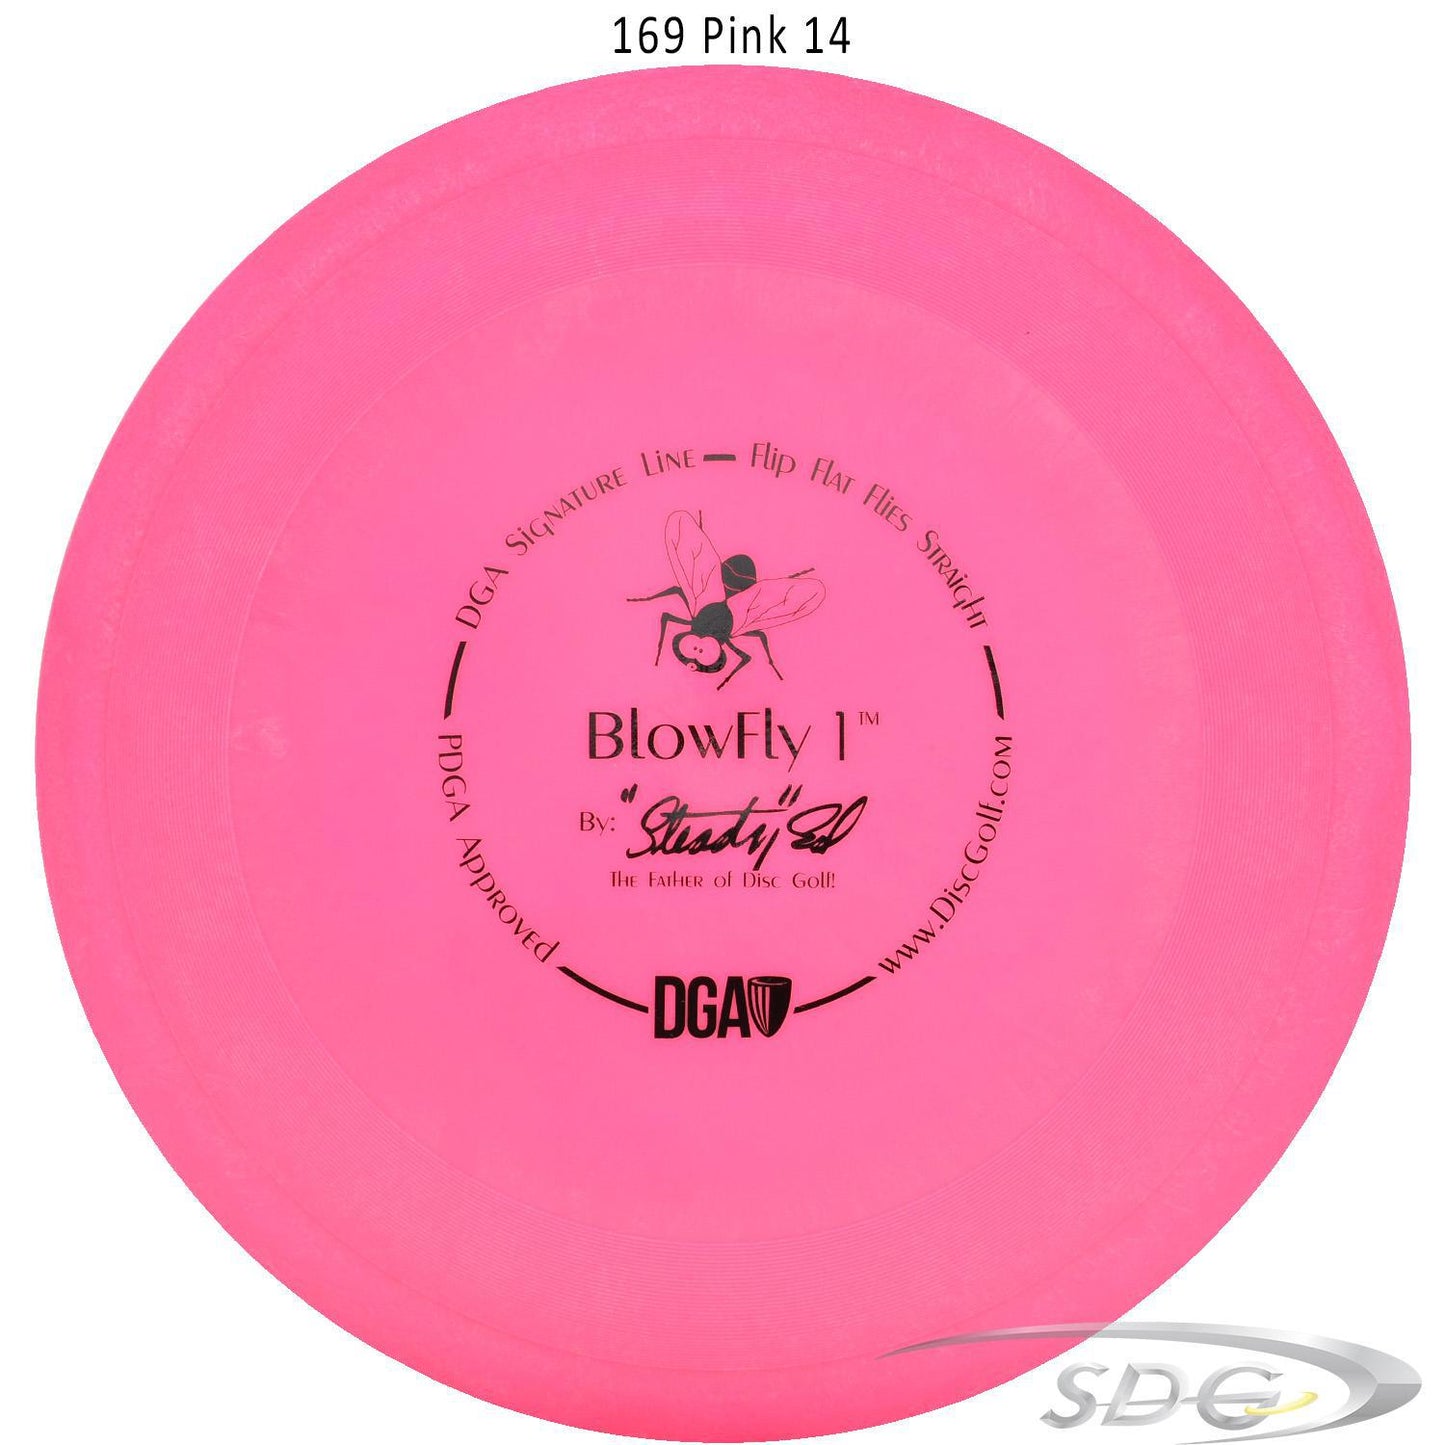 dga-signature-line-blowfly-1-disc-golf-putter 169 Pink 14 